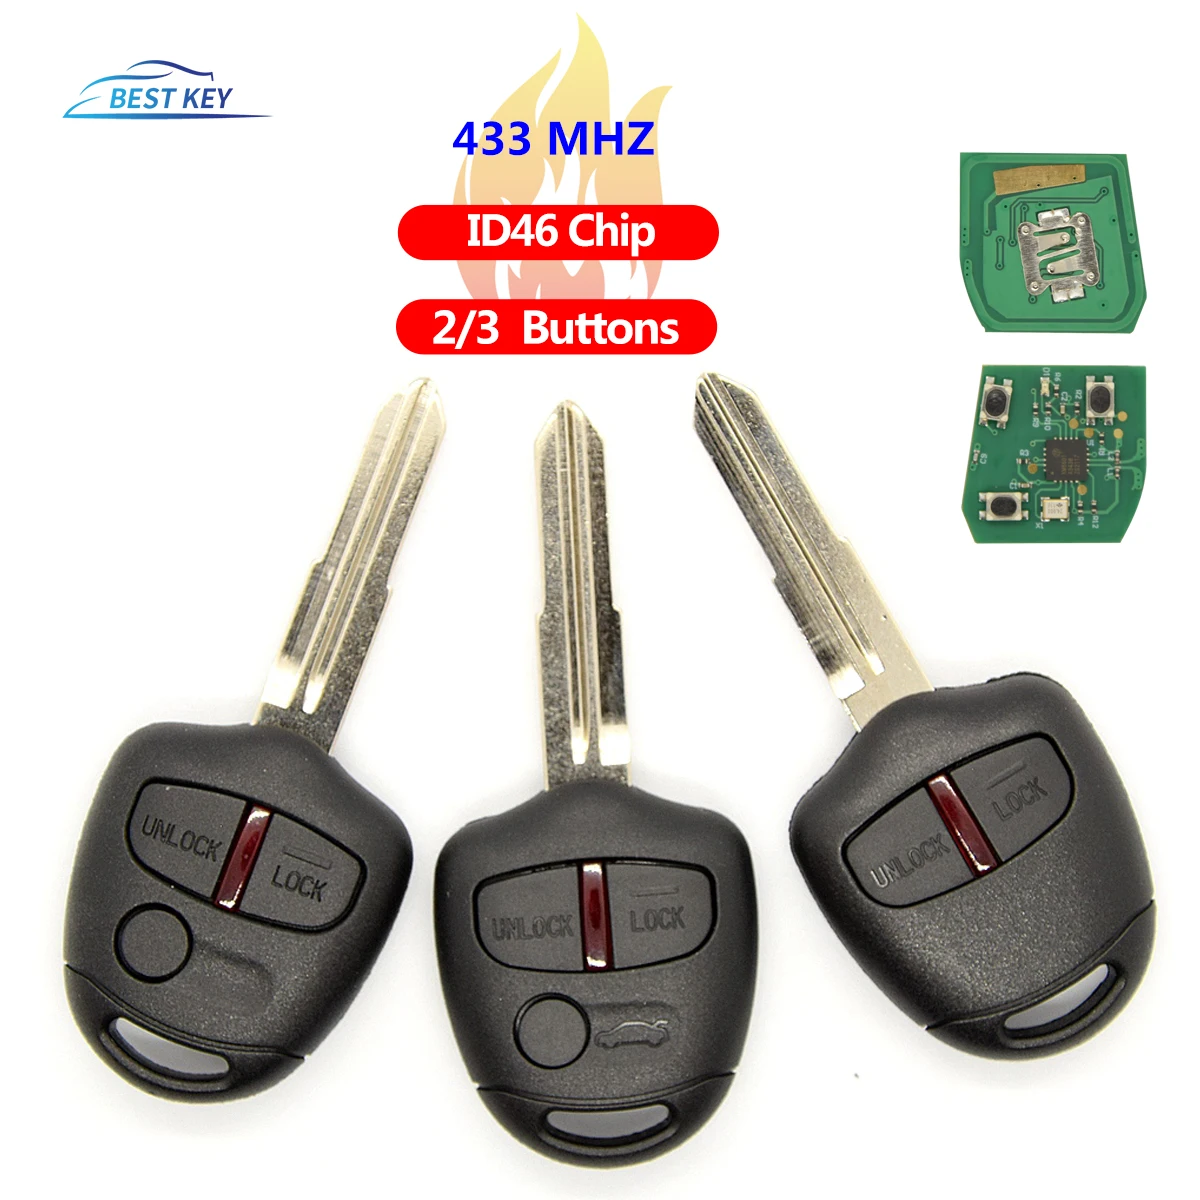 BEST KEY  2 3 Buttons Car Remote Key For Mitsubishi Outlander Pajero Triton ASX Lancer Shogun MIT8 MIT11 Blade 433Mhz ID 46 Chip